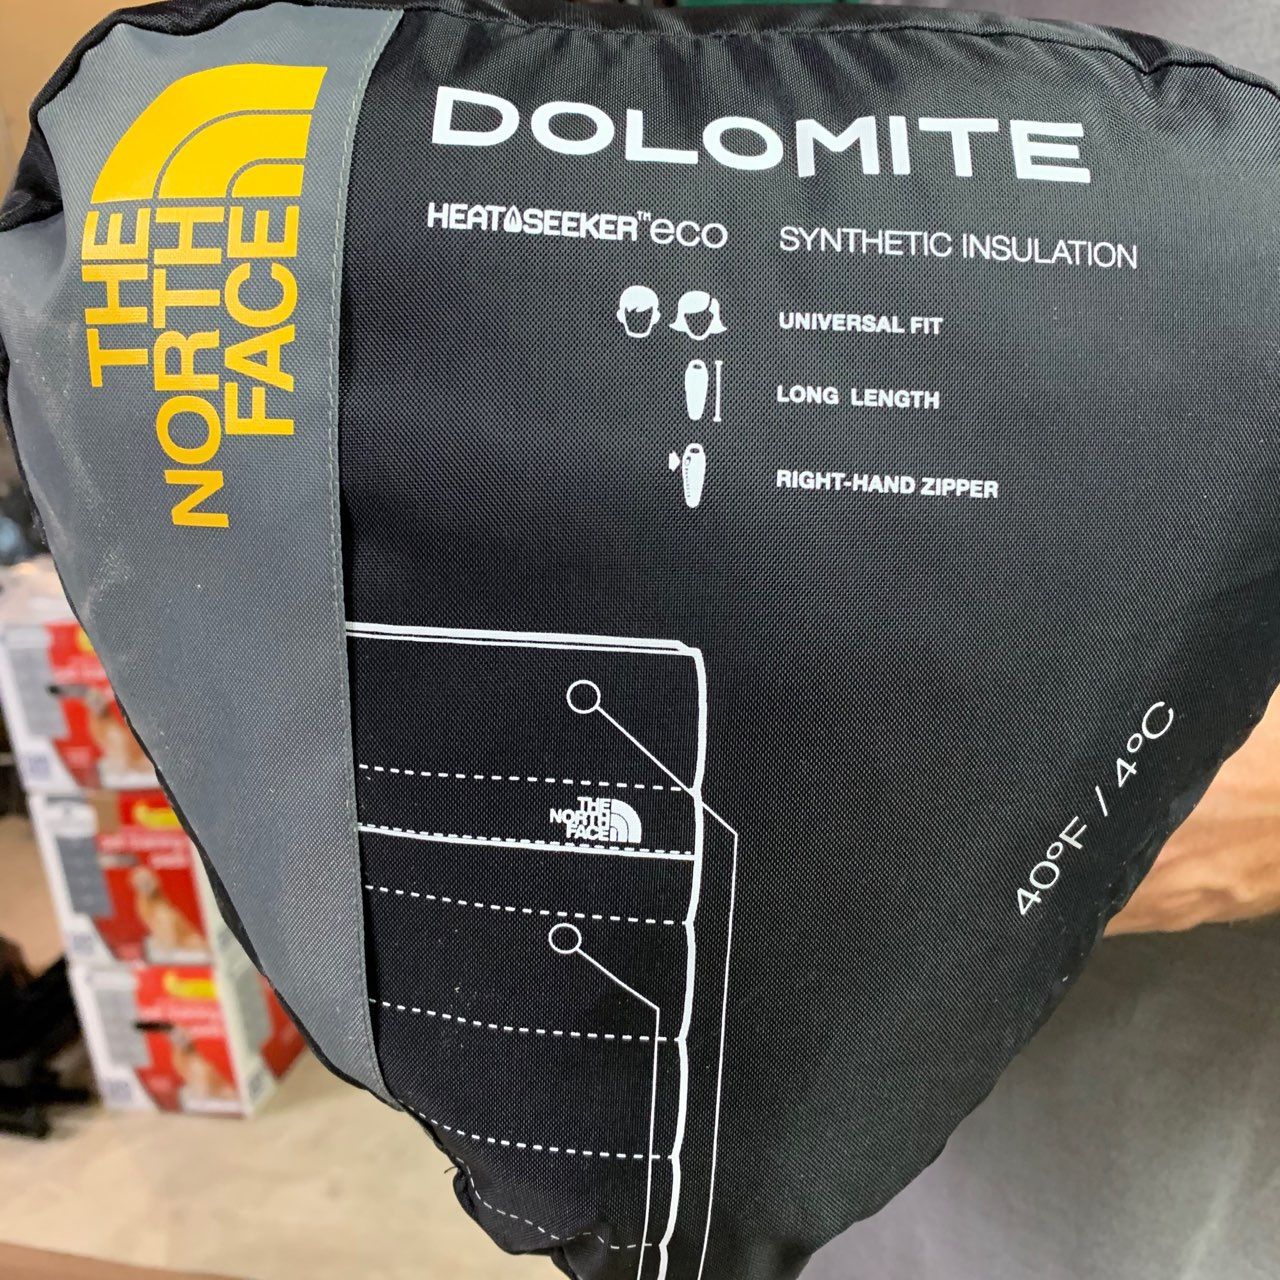 North face (Dolomite) sleeping bag